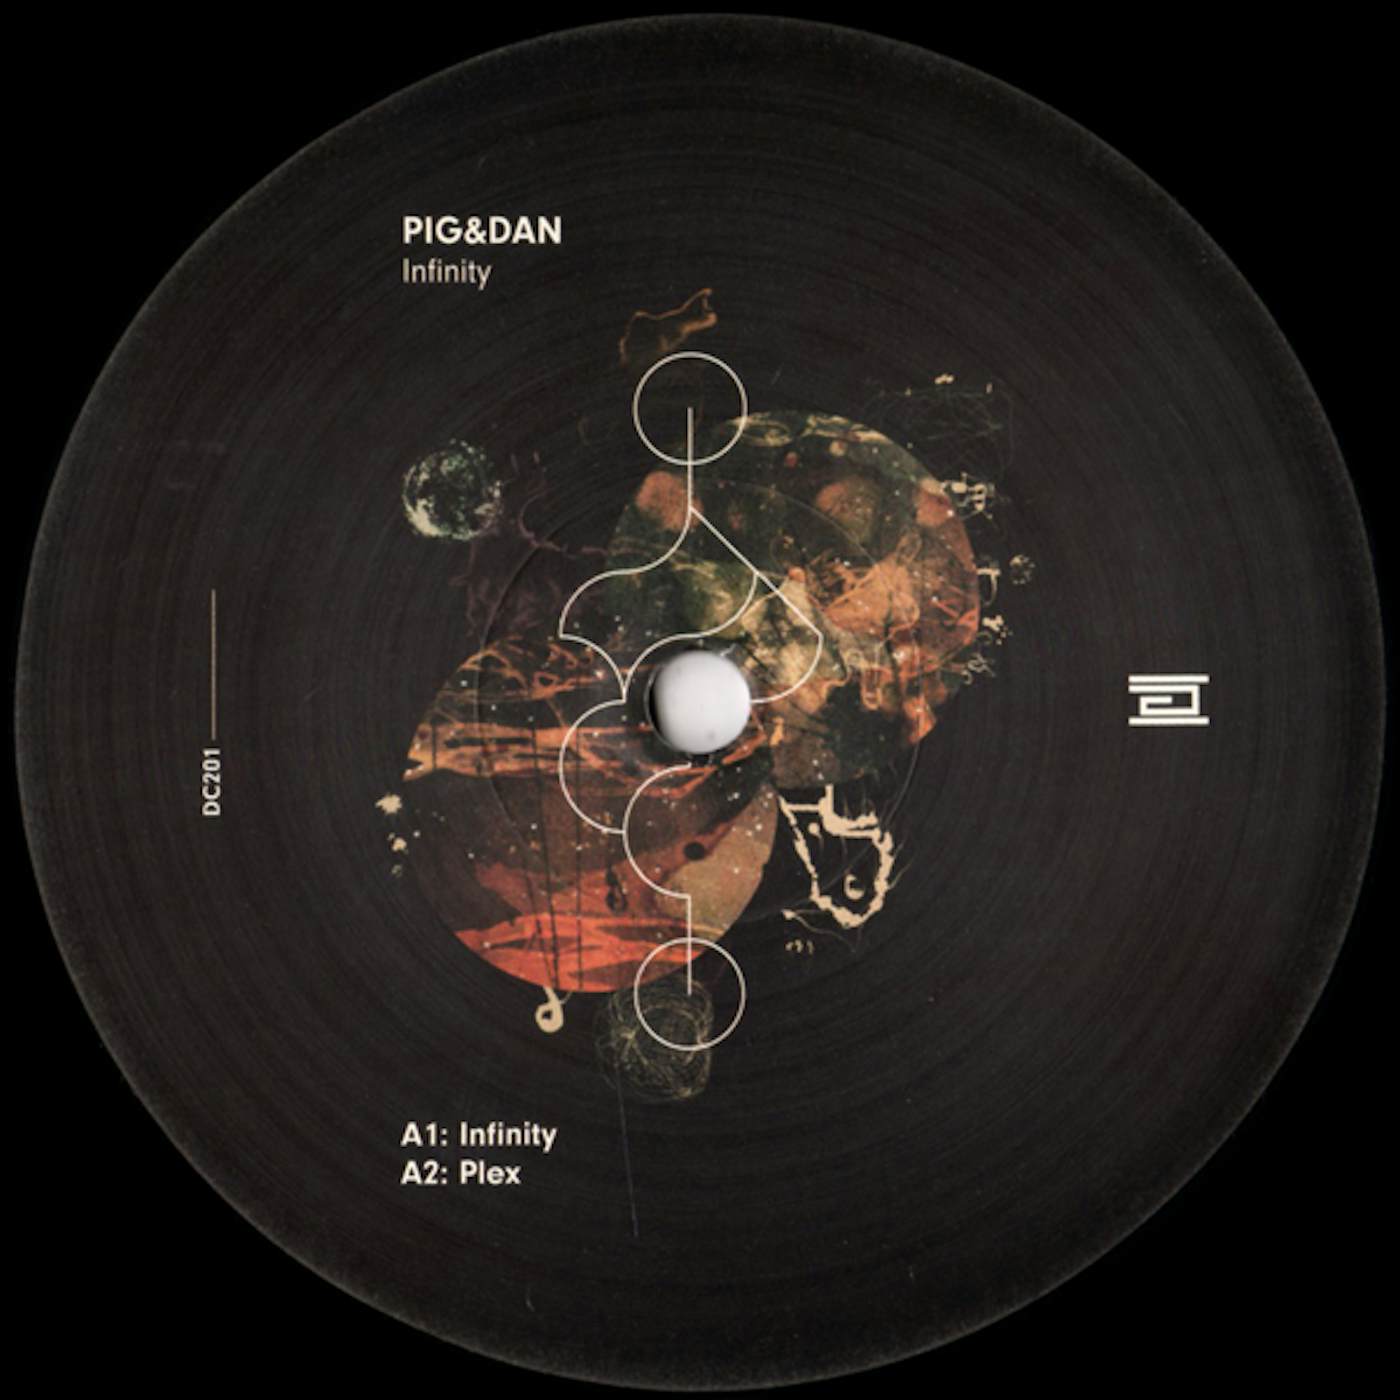 Pig&Dan Infinity Vinyl Record